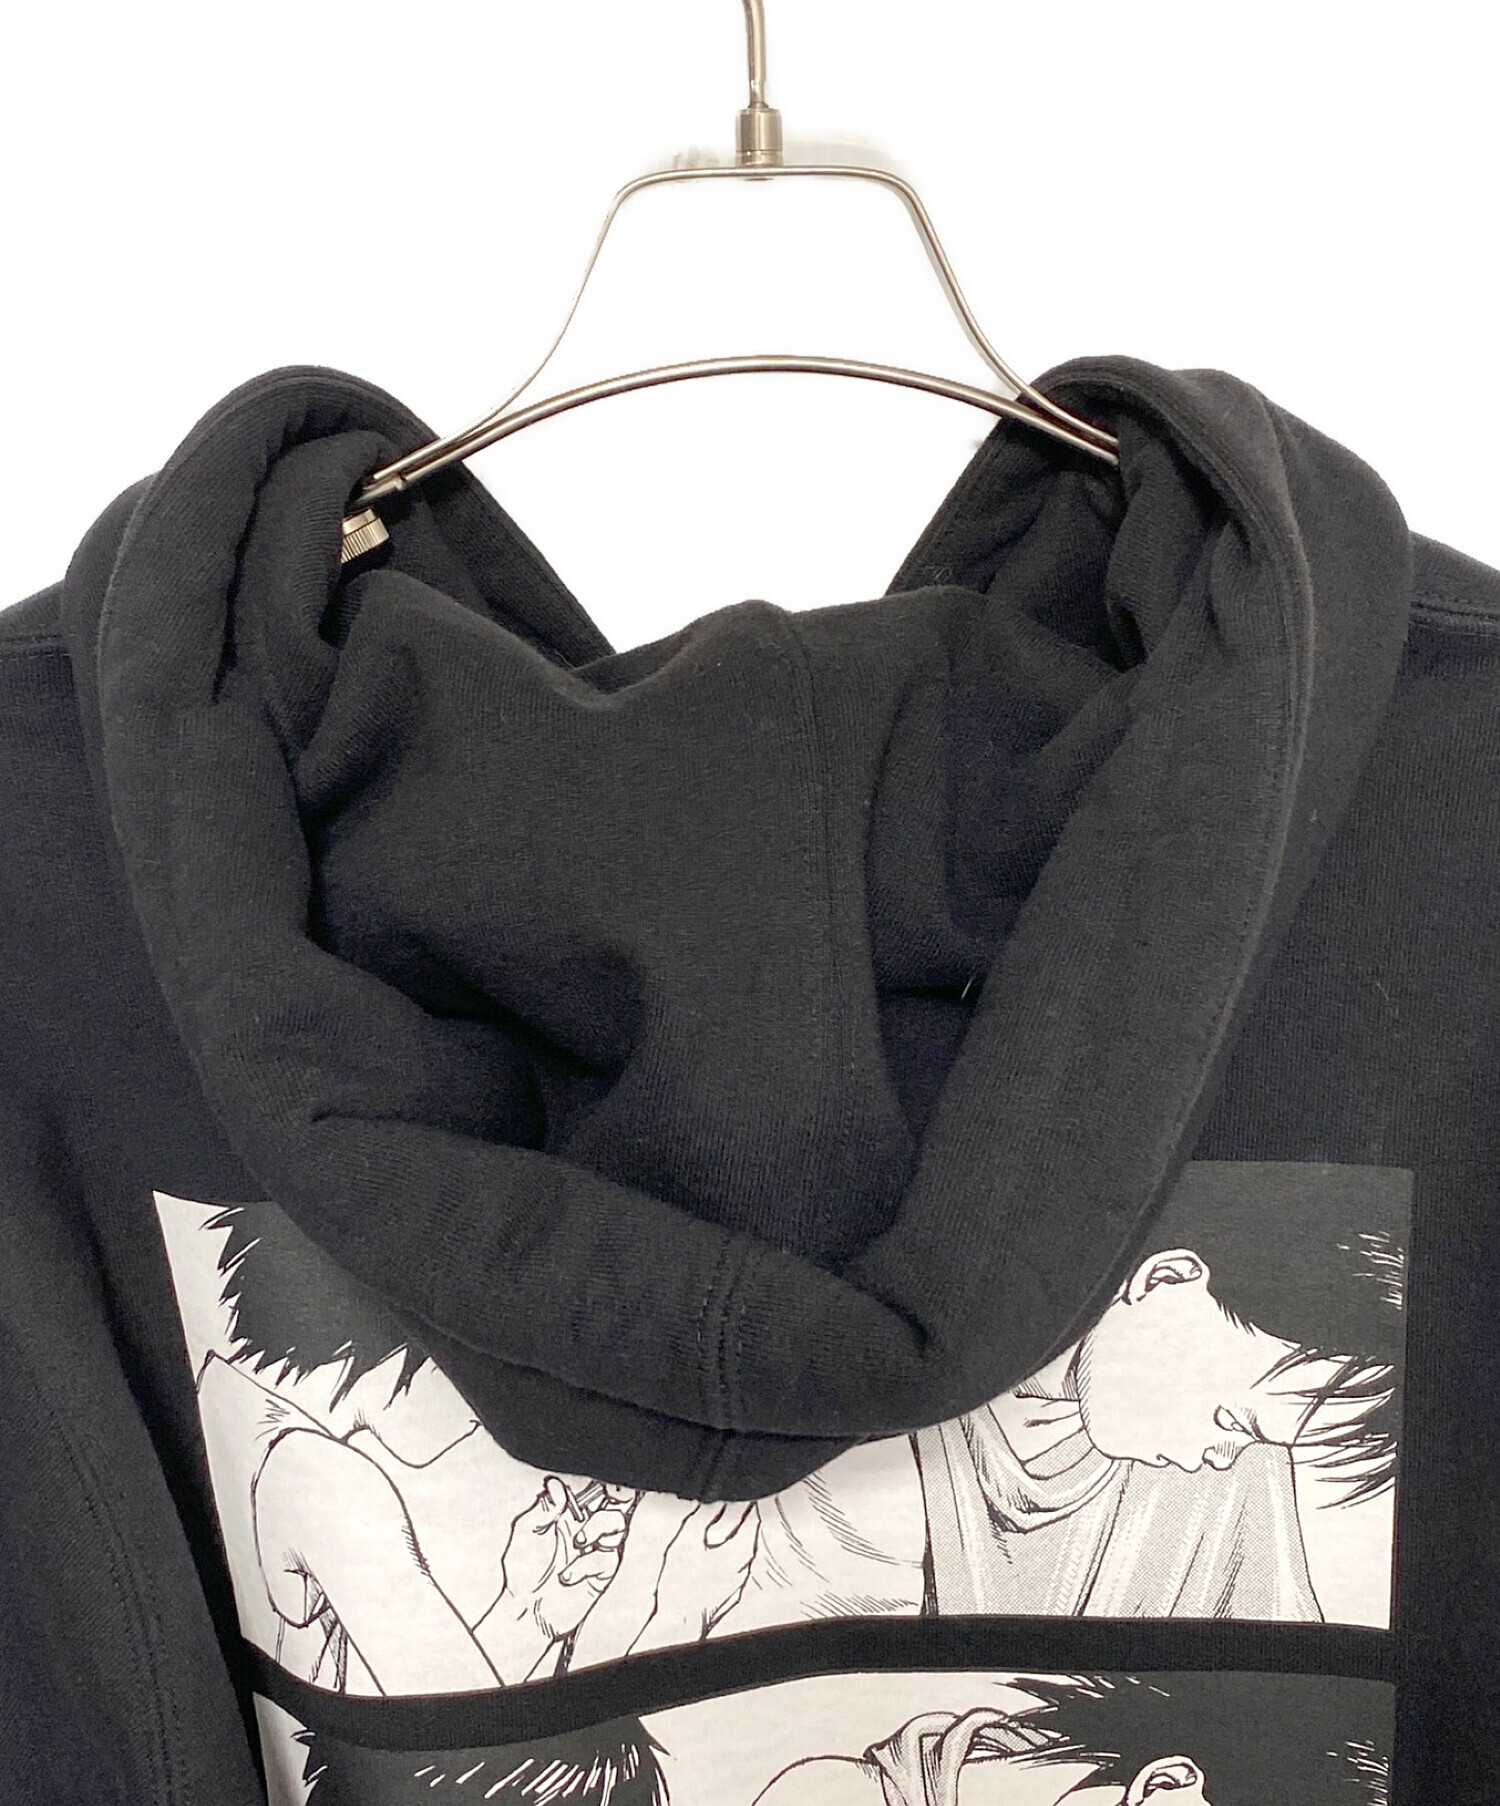 SUPREME (シュプリーム) Akira Syringe Zip Up Hooded Sweatshirt ブラック サイズ:M